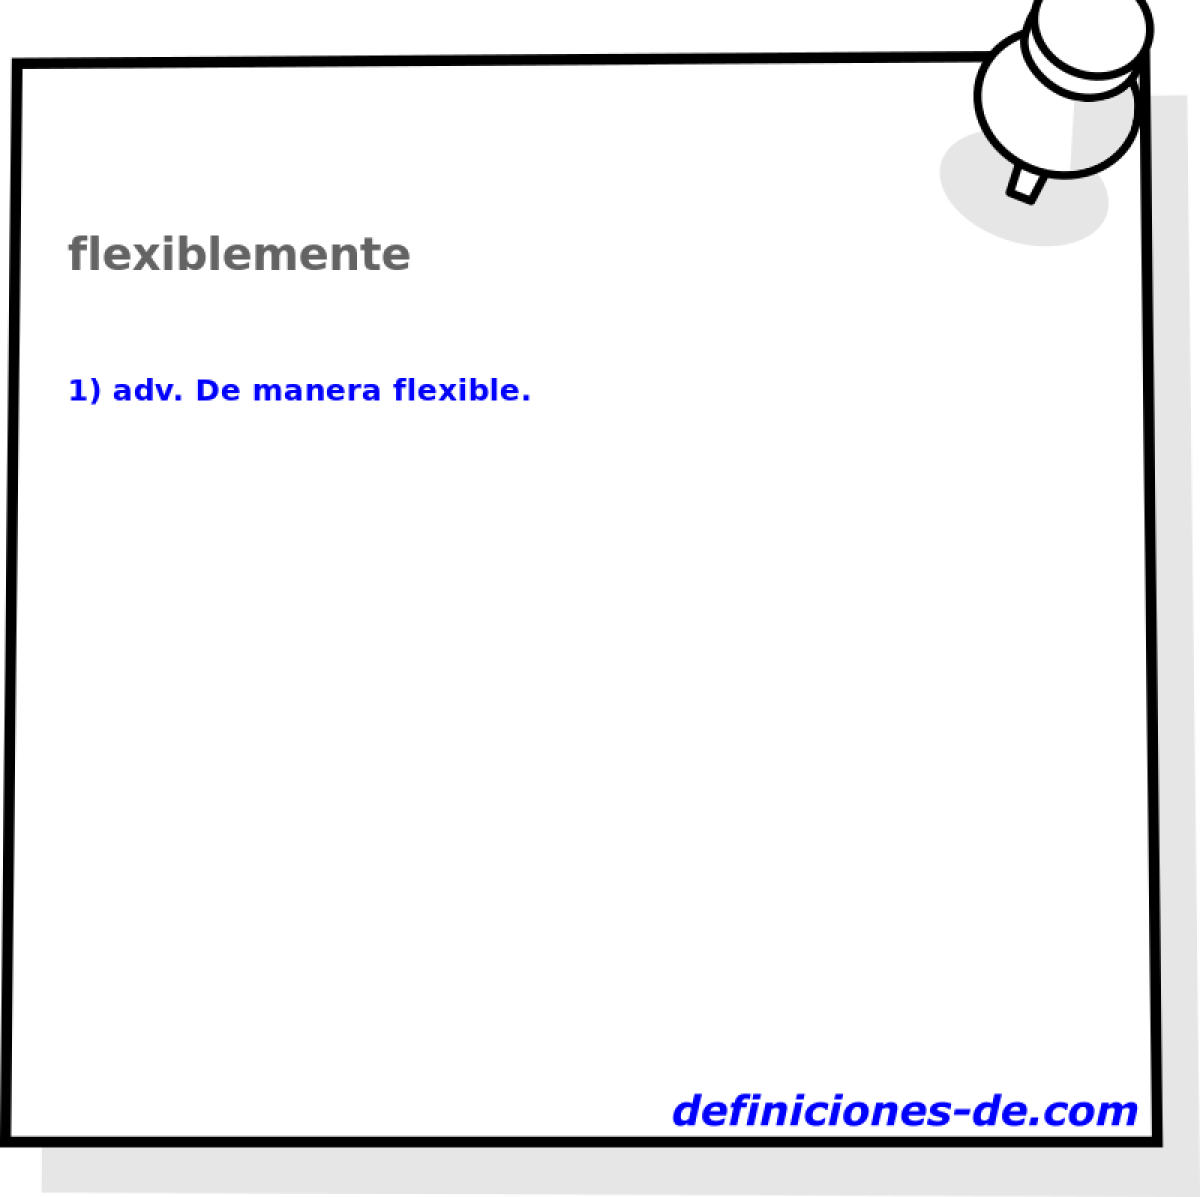 flexiblemente 